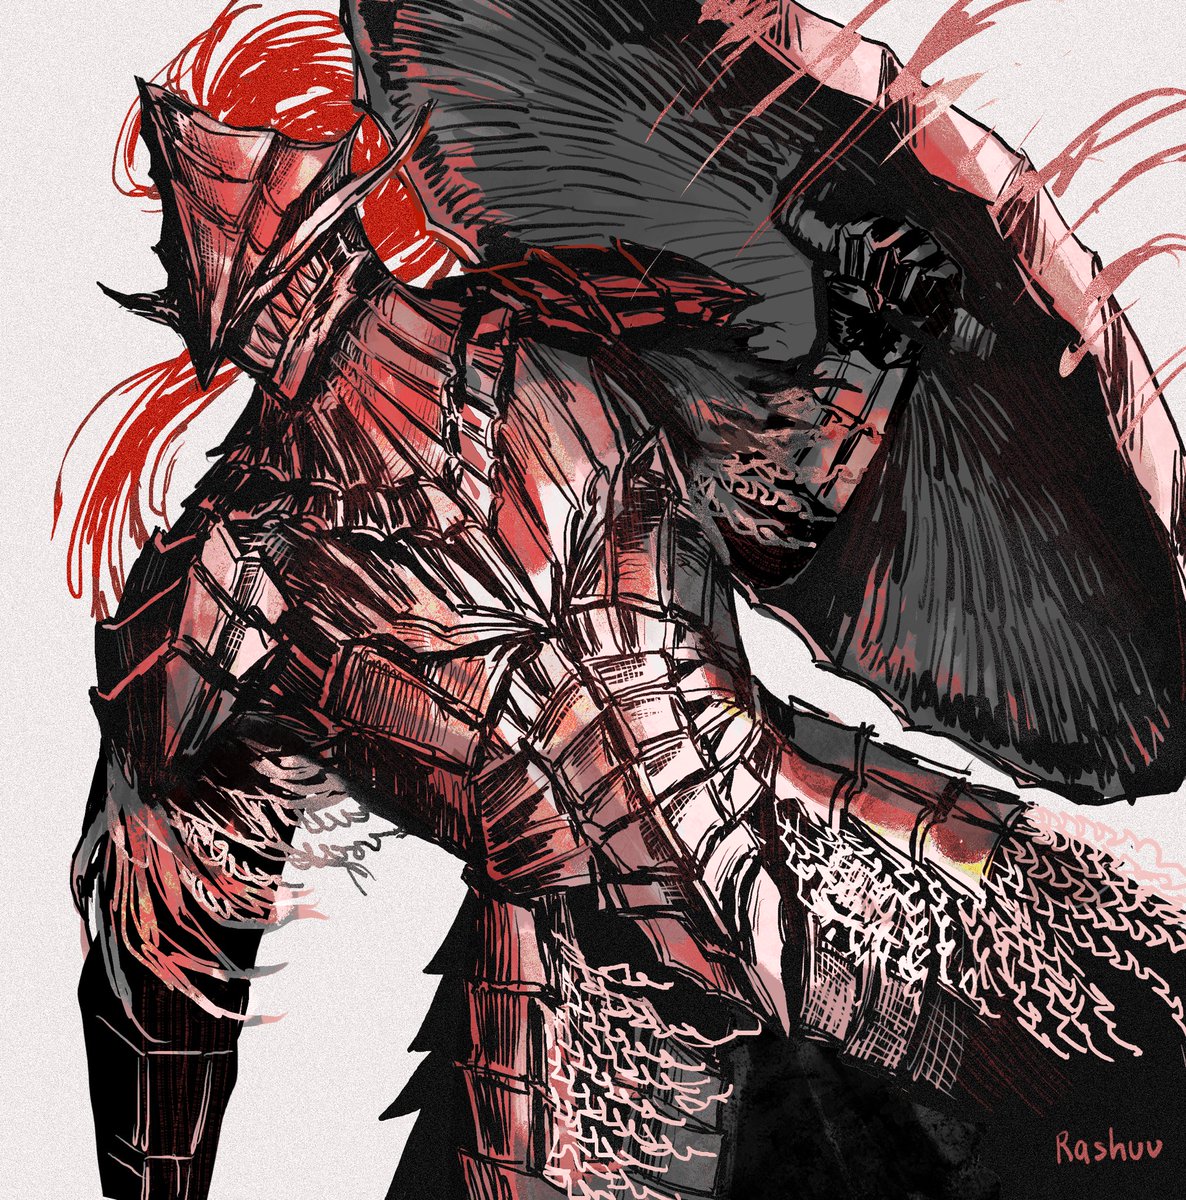 RT @_Rashuu_: Dragonslayer Armour
#DarkSouls3 https://t.co/x8xsYOkFWb